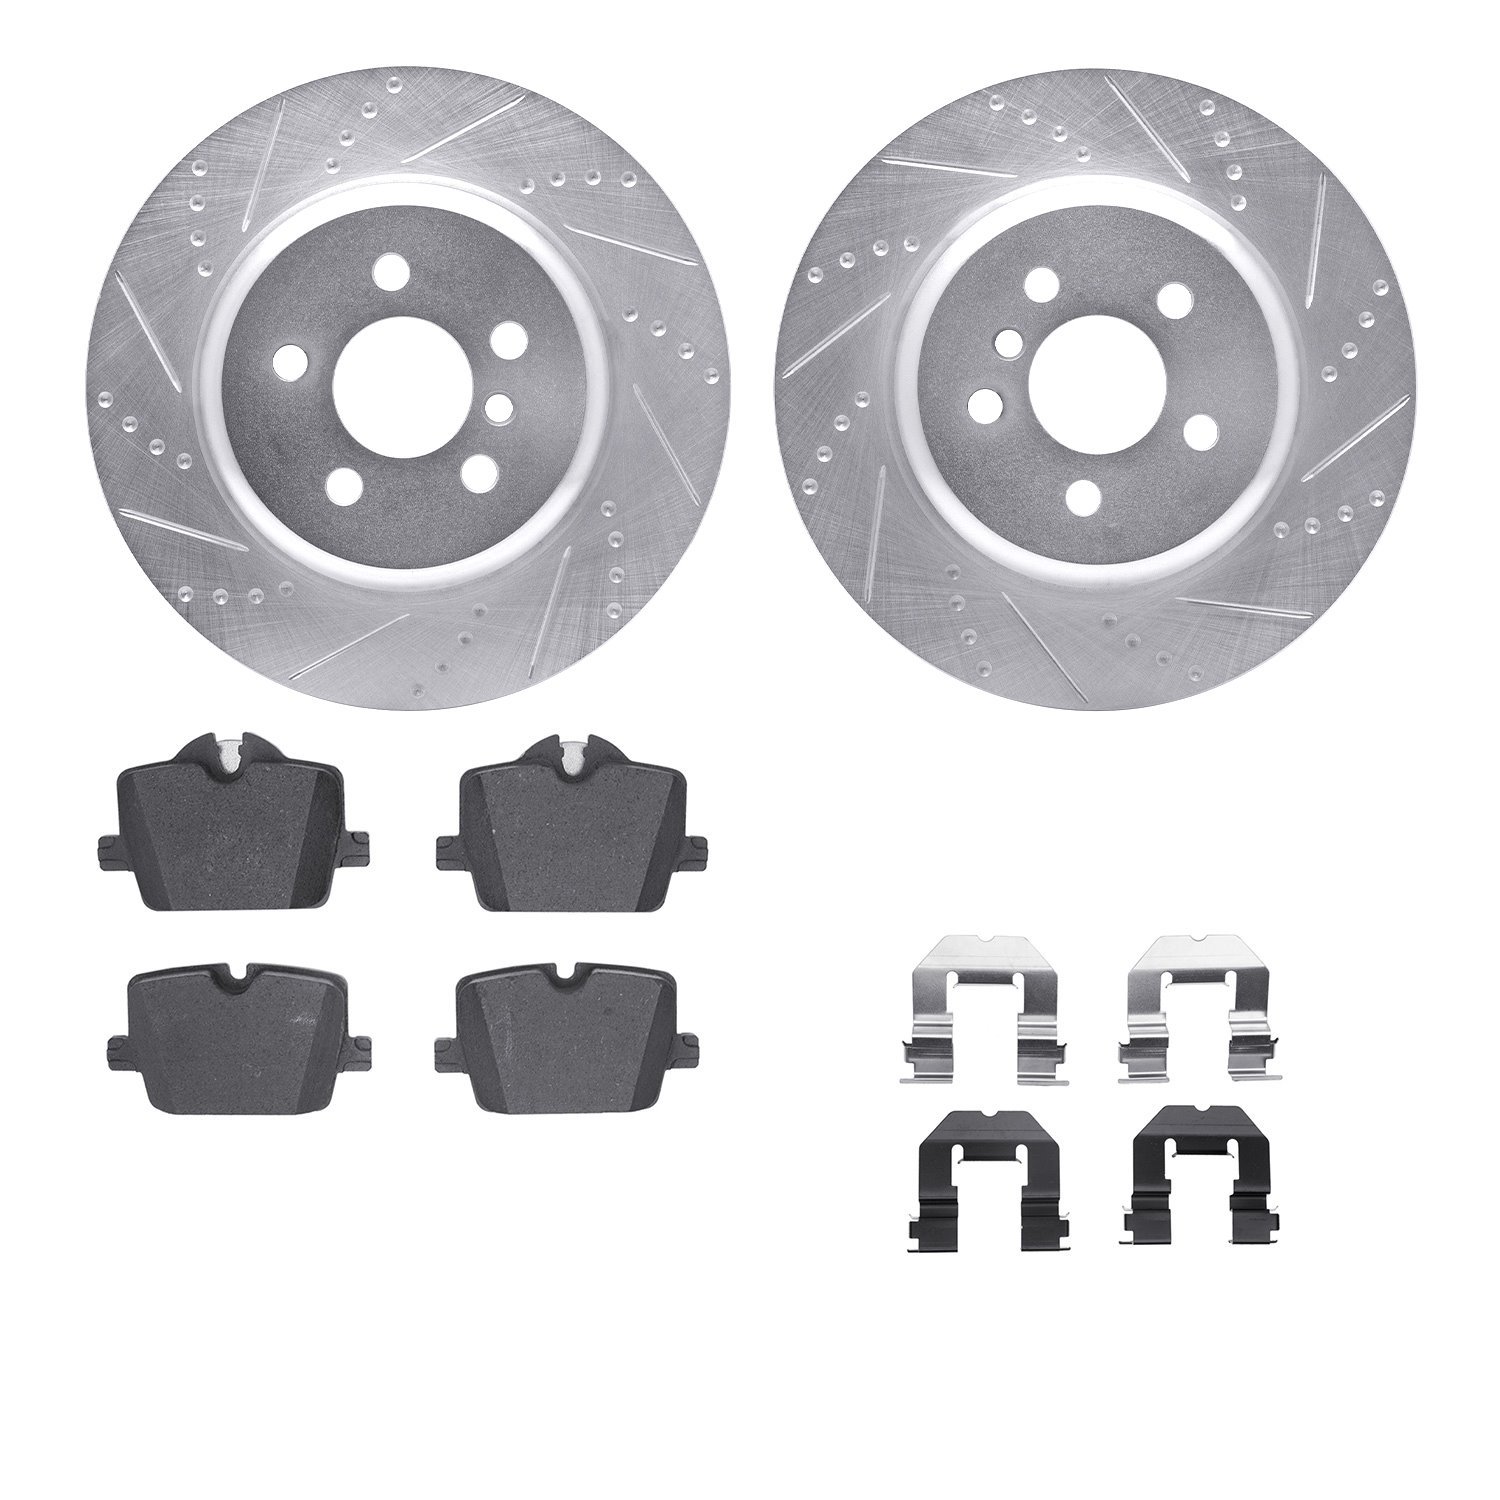 7512-31159 Drilled/Slotted Brake Rotors w/5000 Advanced Brake Pads Kit & Hardware [Silver], Fits Select Multiple Makes/Models, P